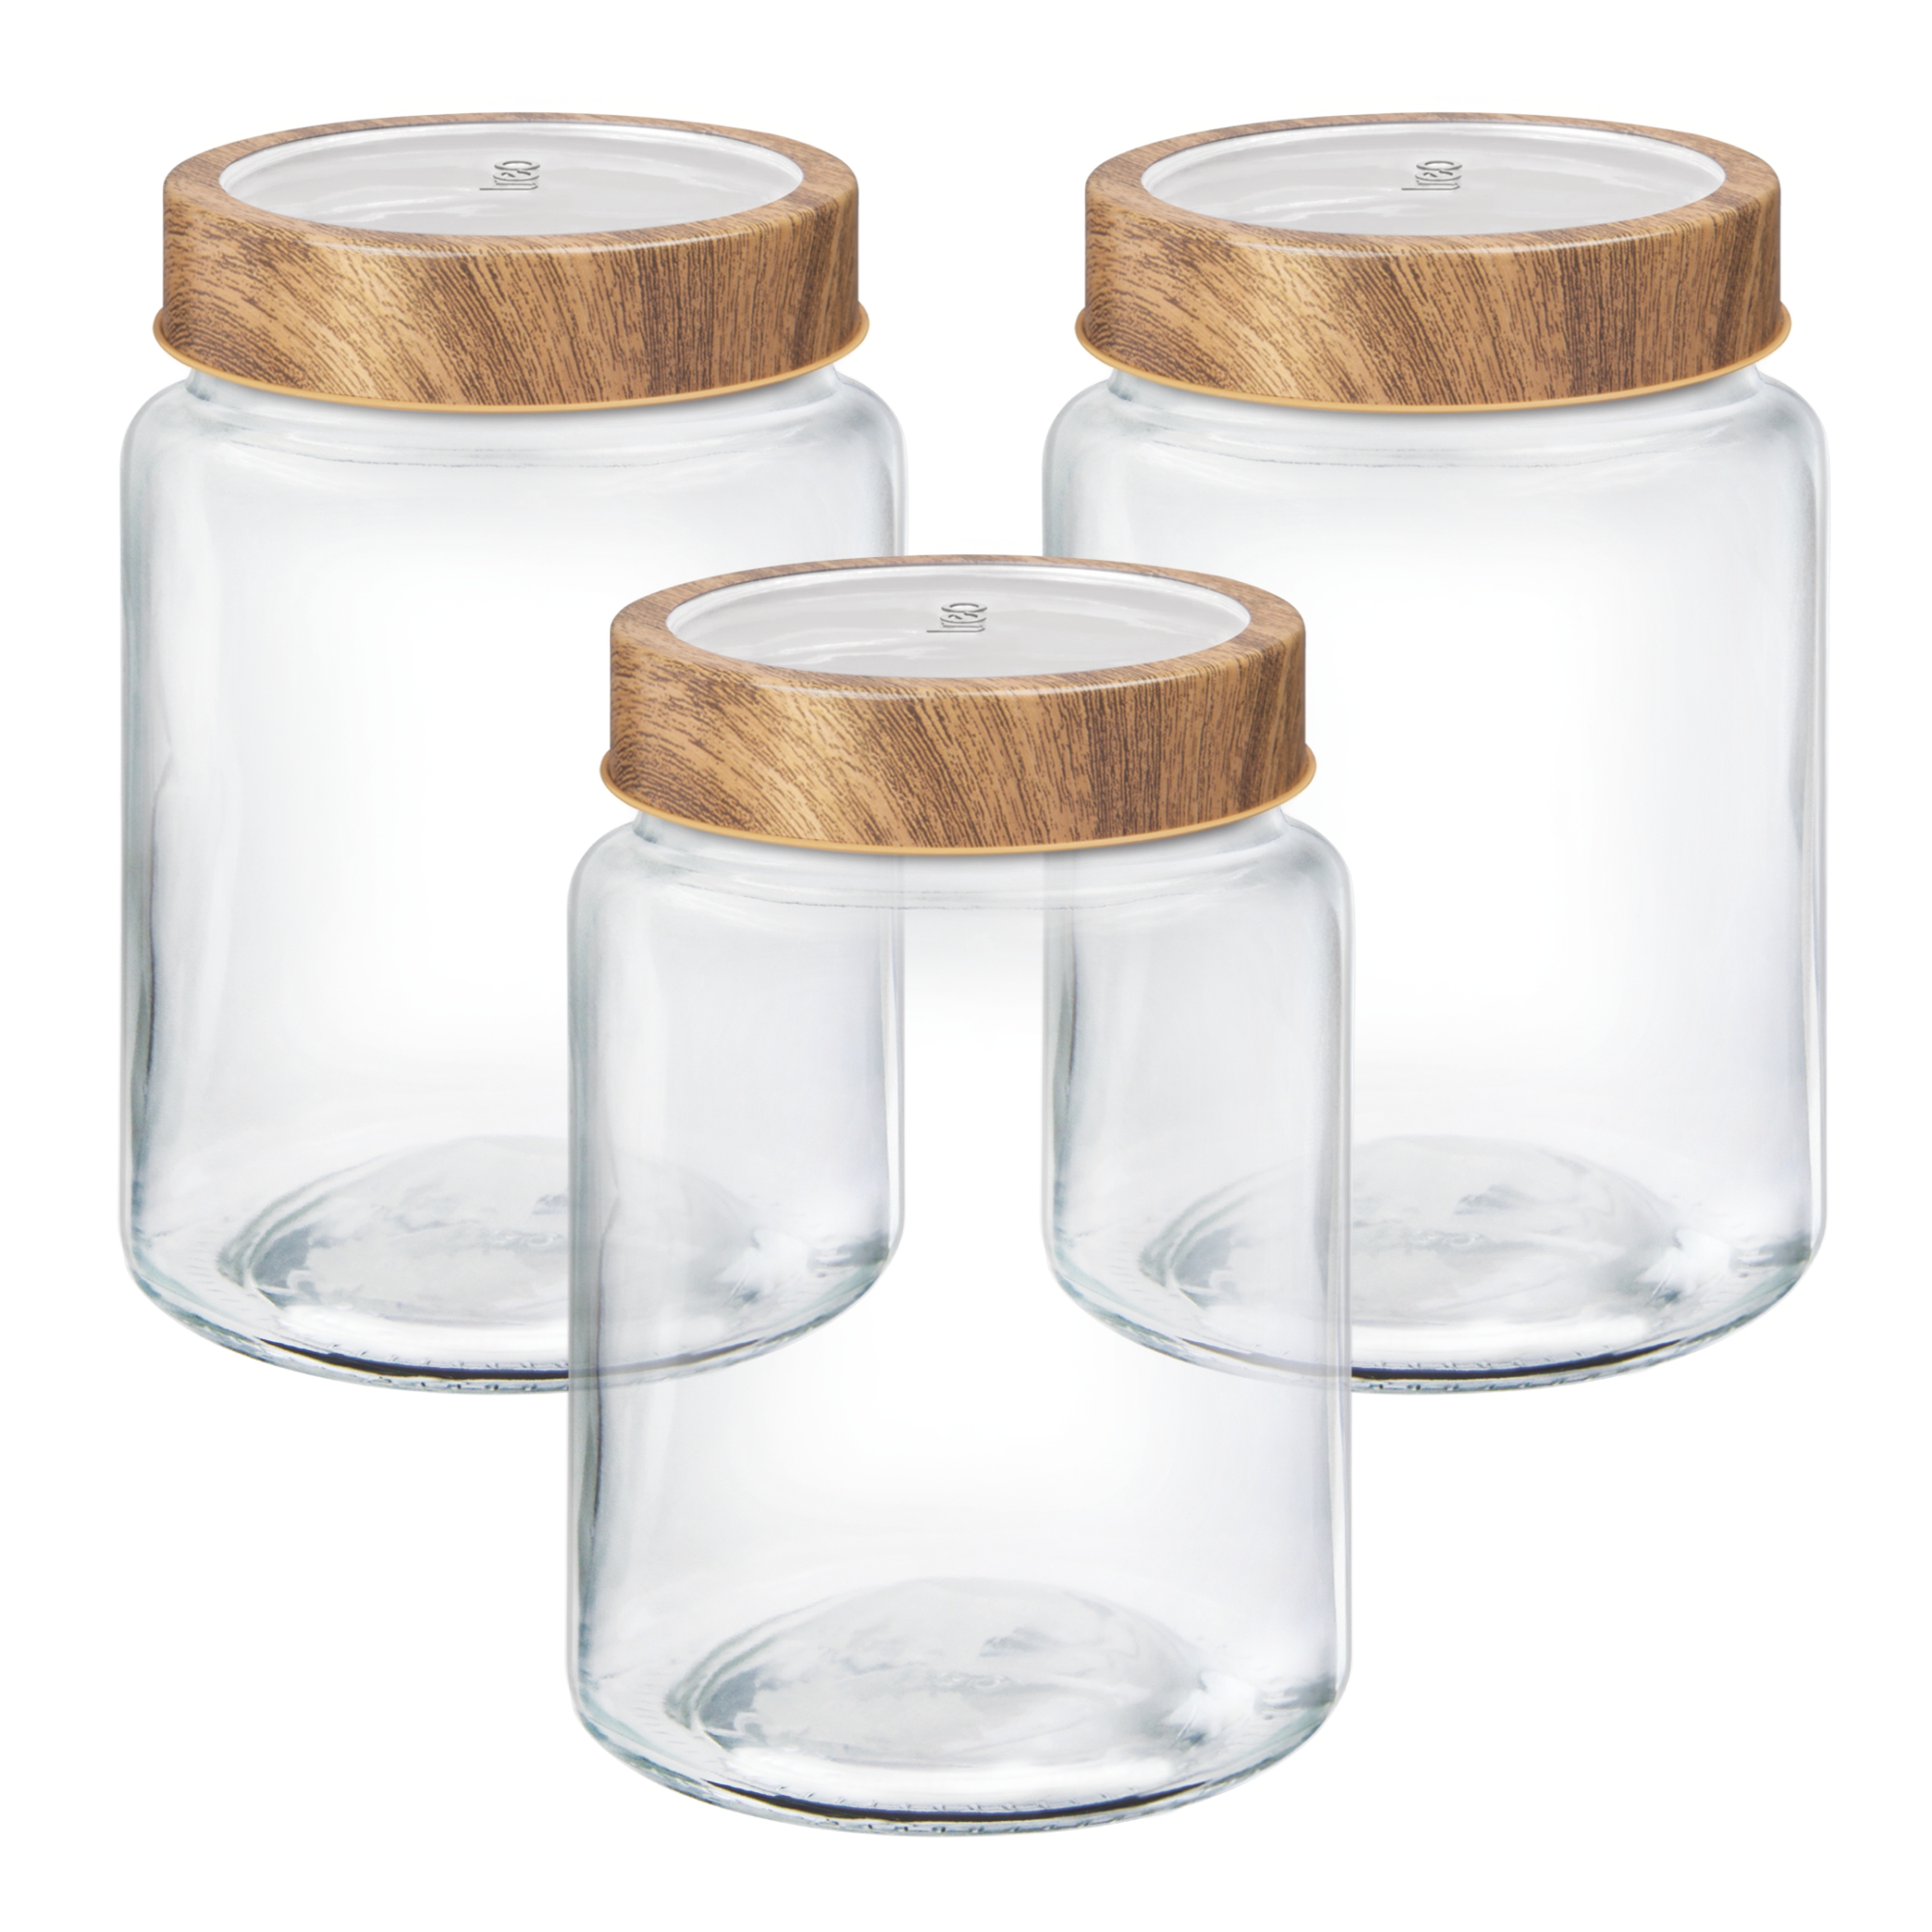 Treo Woody Radius Glass Spice Jar Set